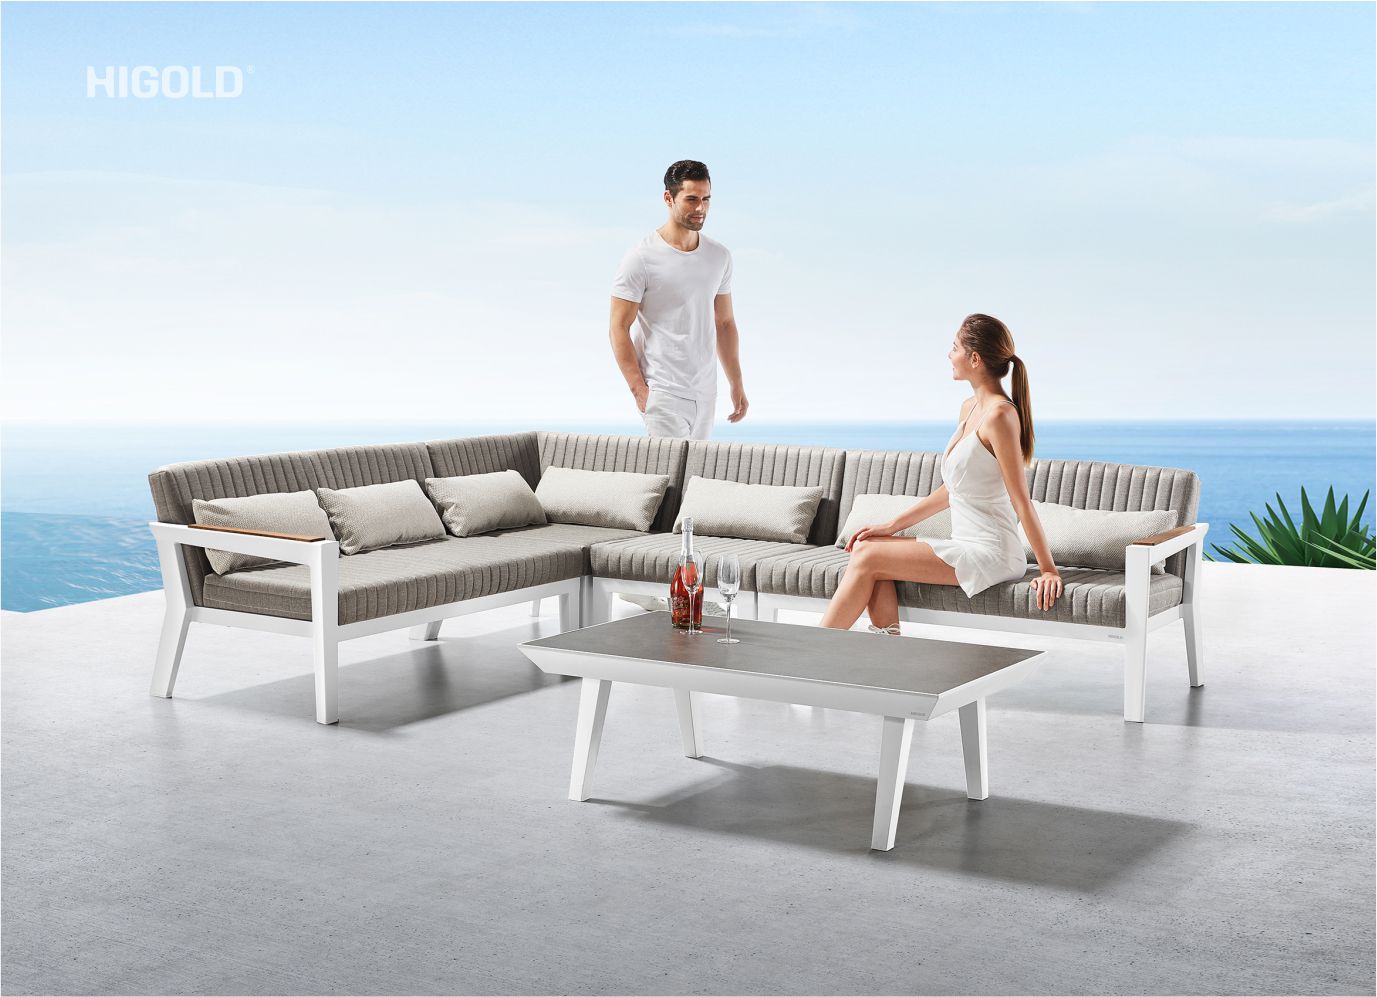 Champion outdoor sectional sofa for 6 sunbrella fabric aluminum